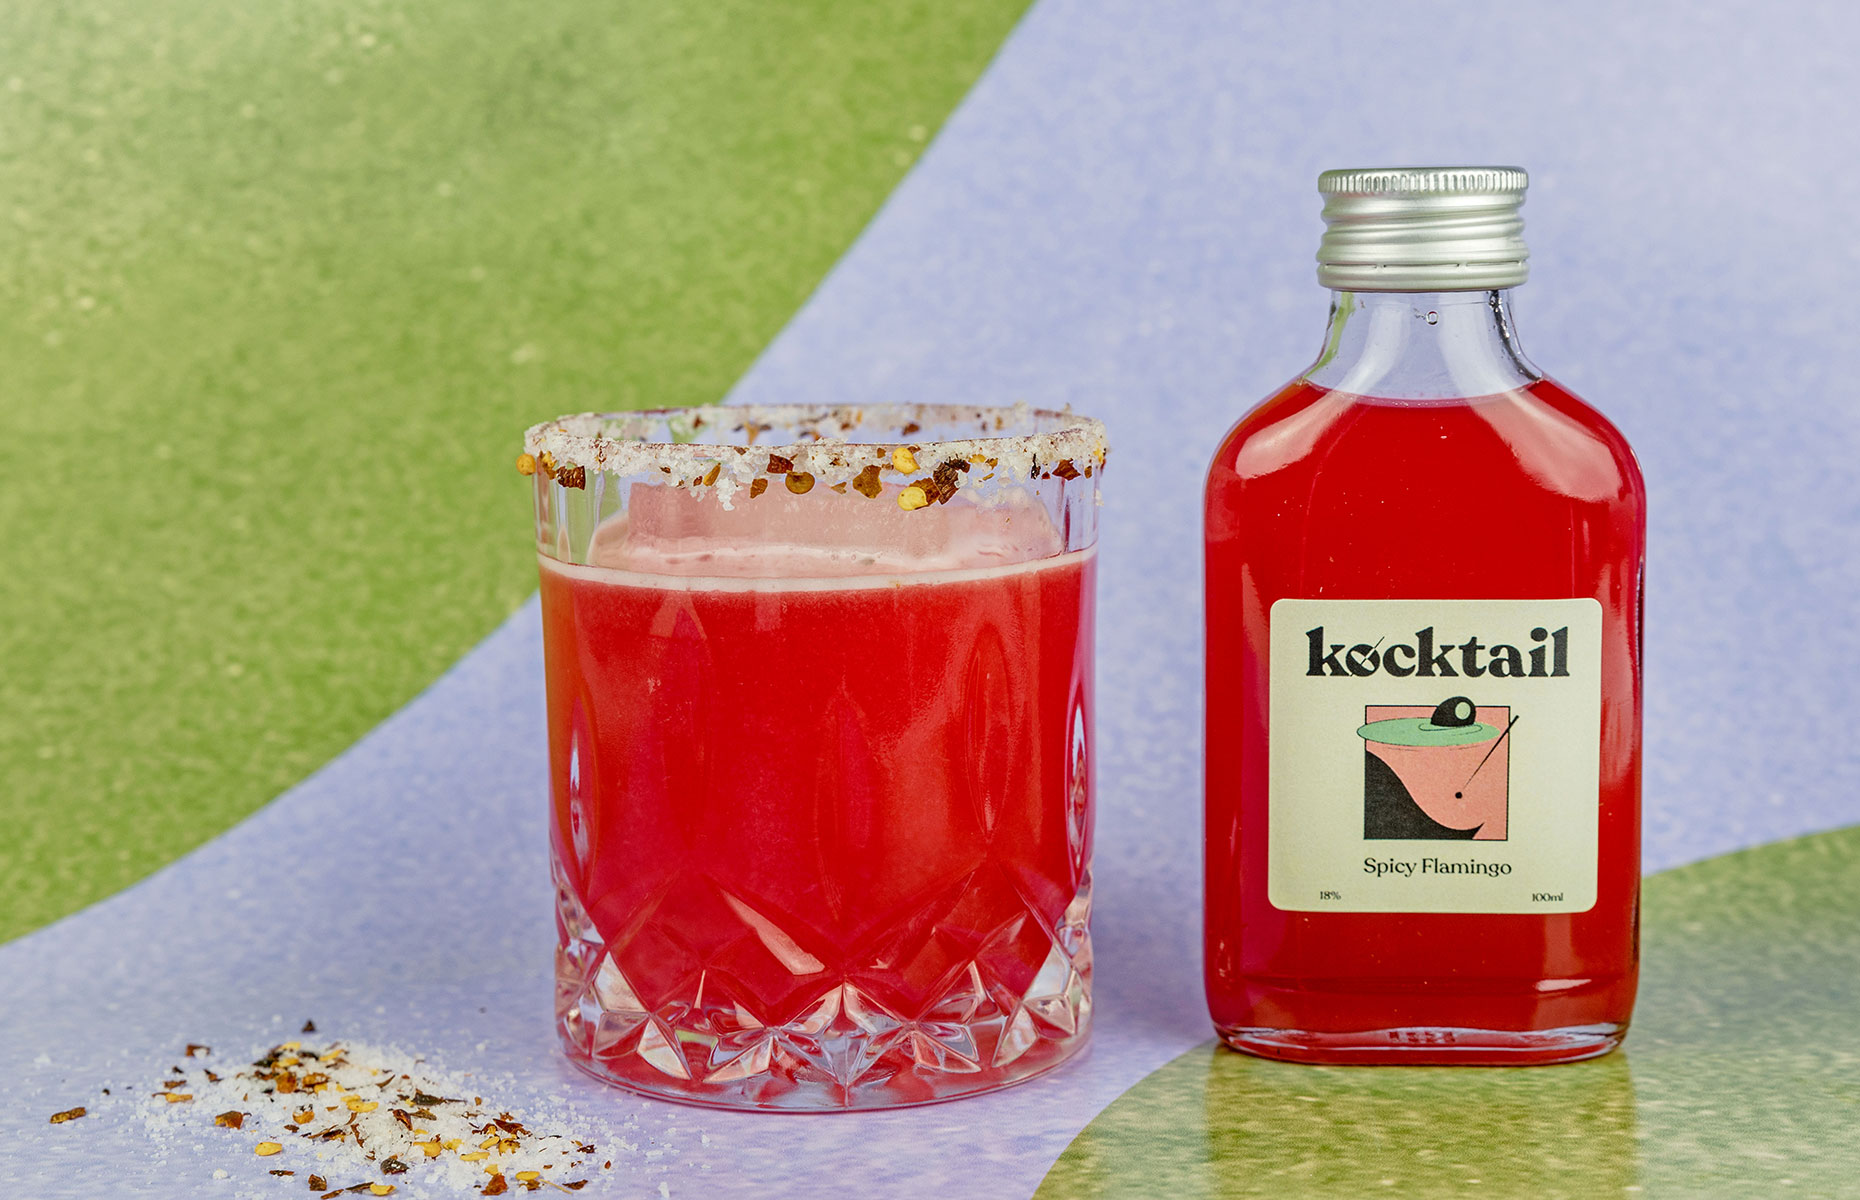 Kocktail spicy flamingo cocktail (Image: Courtesy of Kocktail)